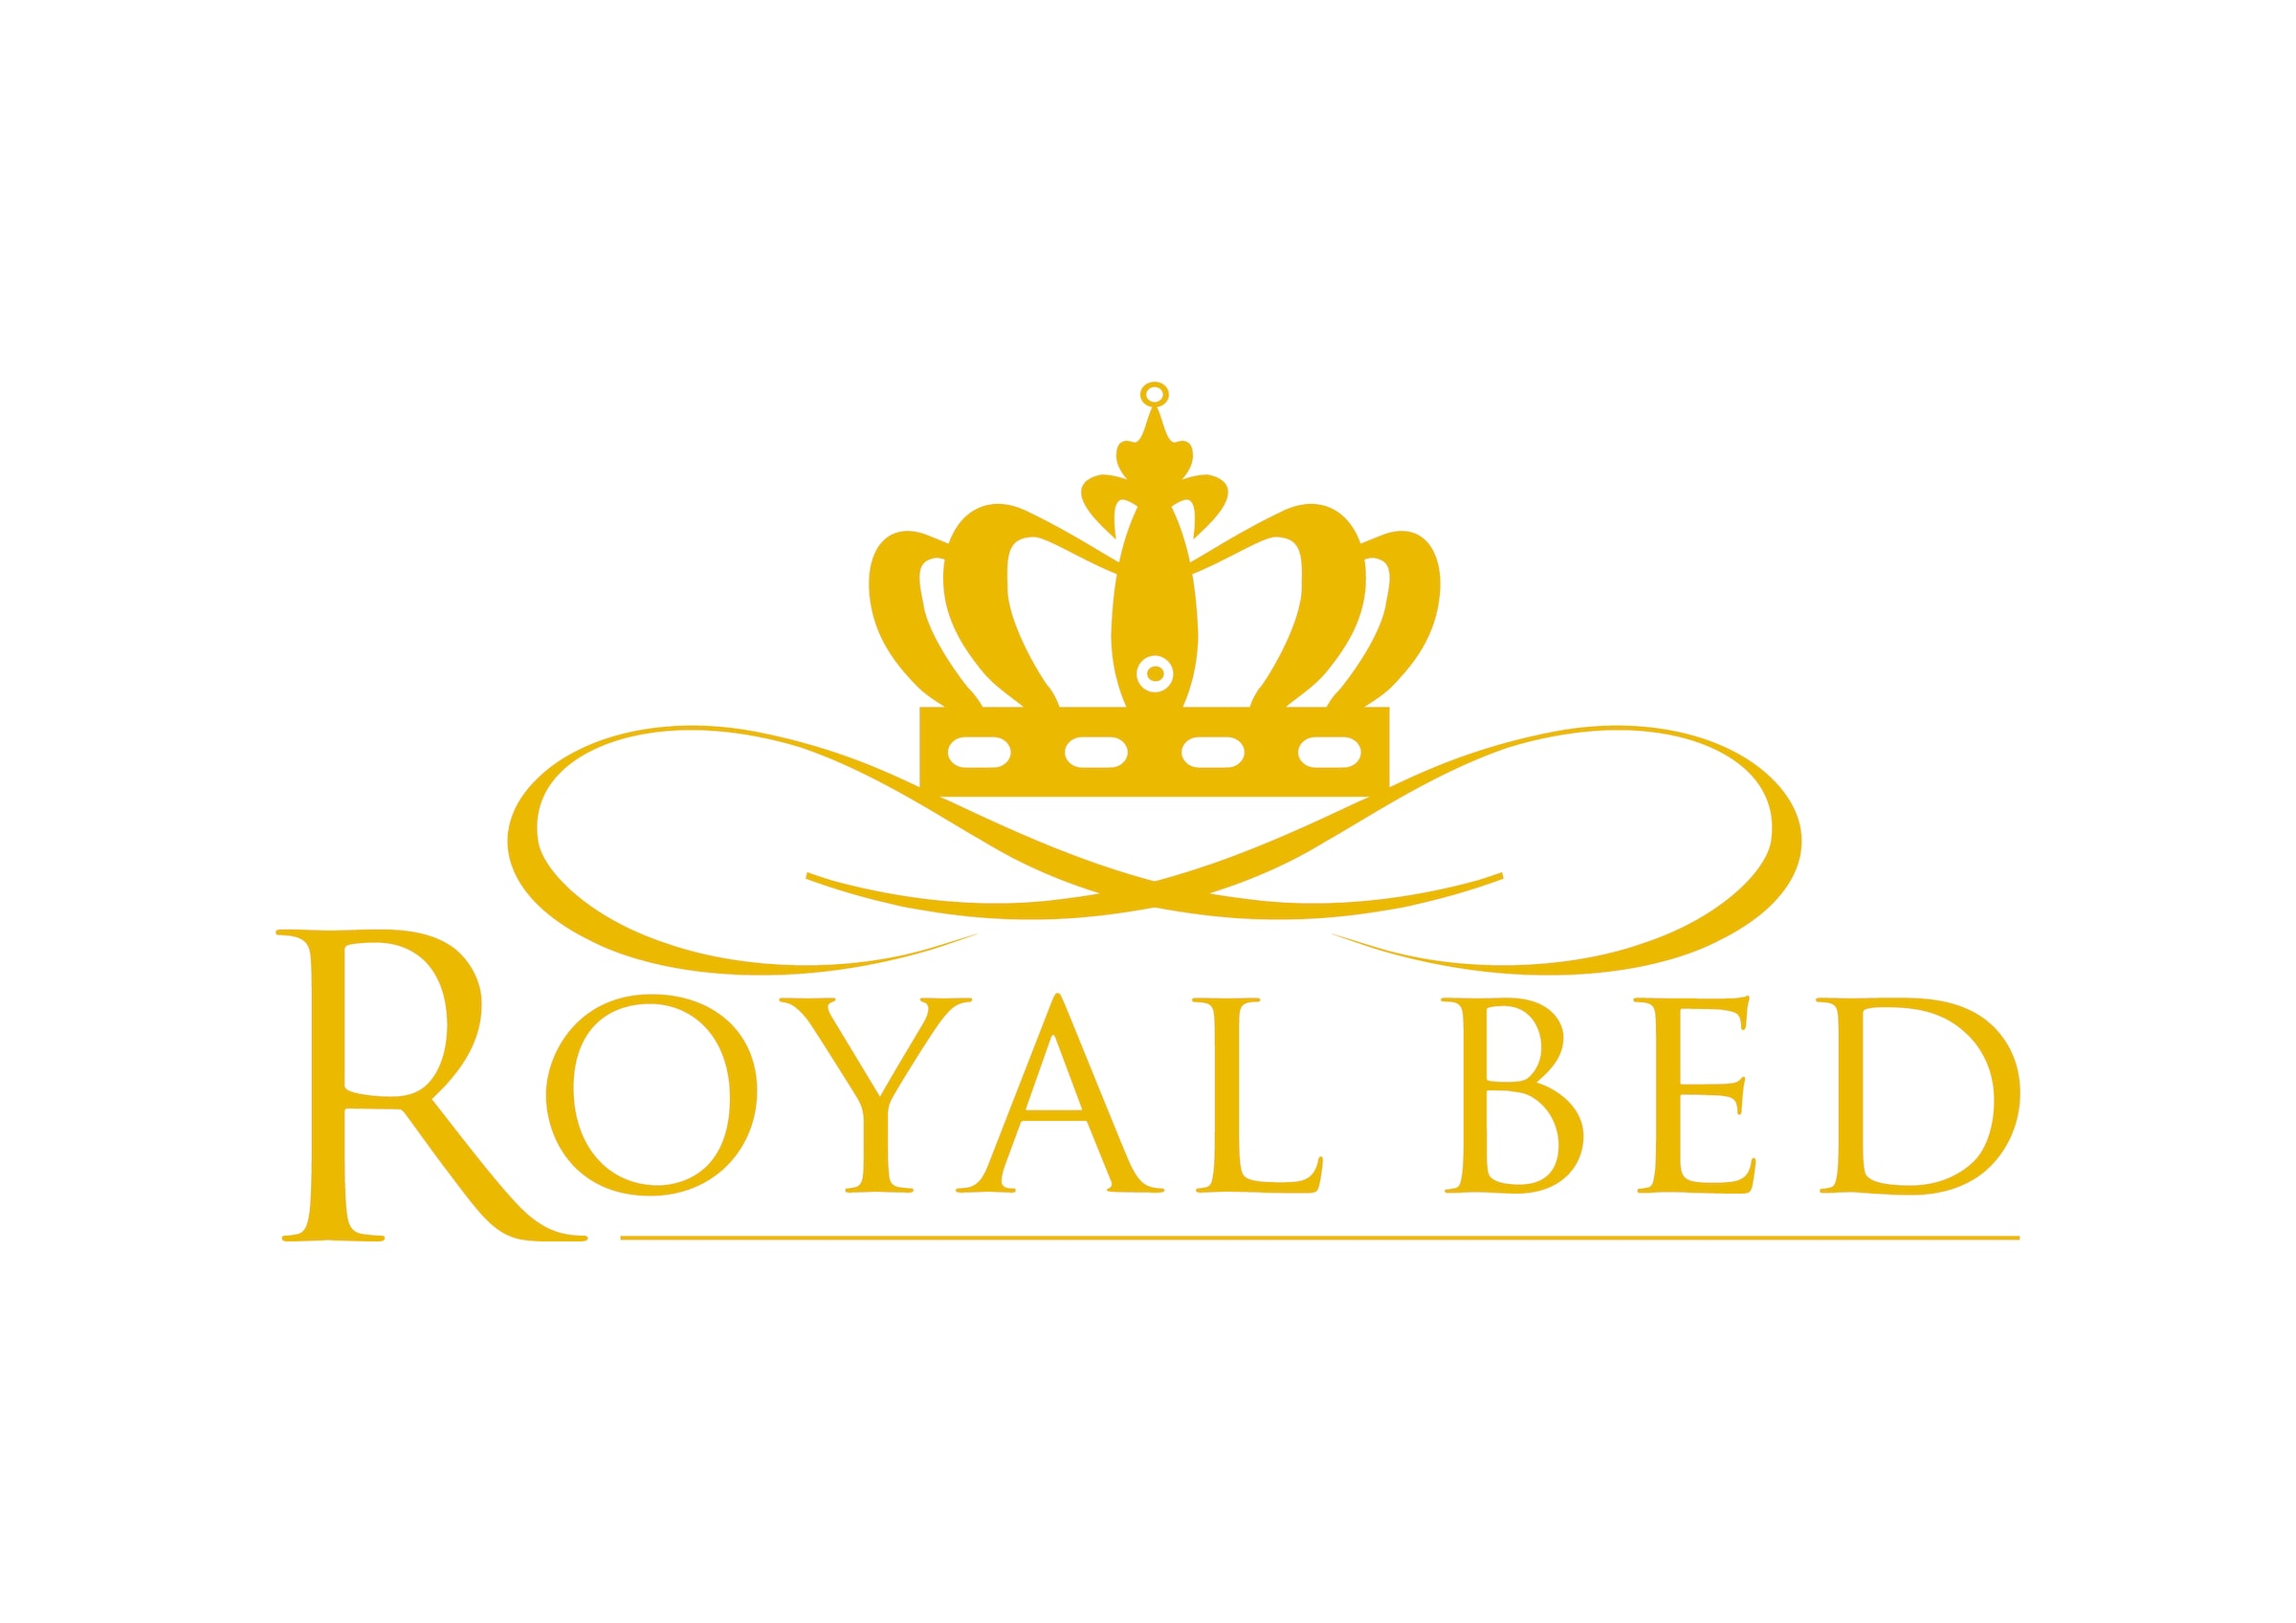 OBB Daunenbettdecke »Royal Bed«, leicht, Füllung 100% Daunen, Bezug Mako-Einschütte, 100% Baumwolle, (1 St.), mit goldener Satin-Biese und goldenem Prägedruck „Royal Bed“